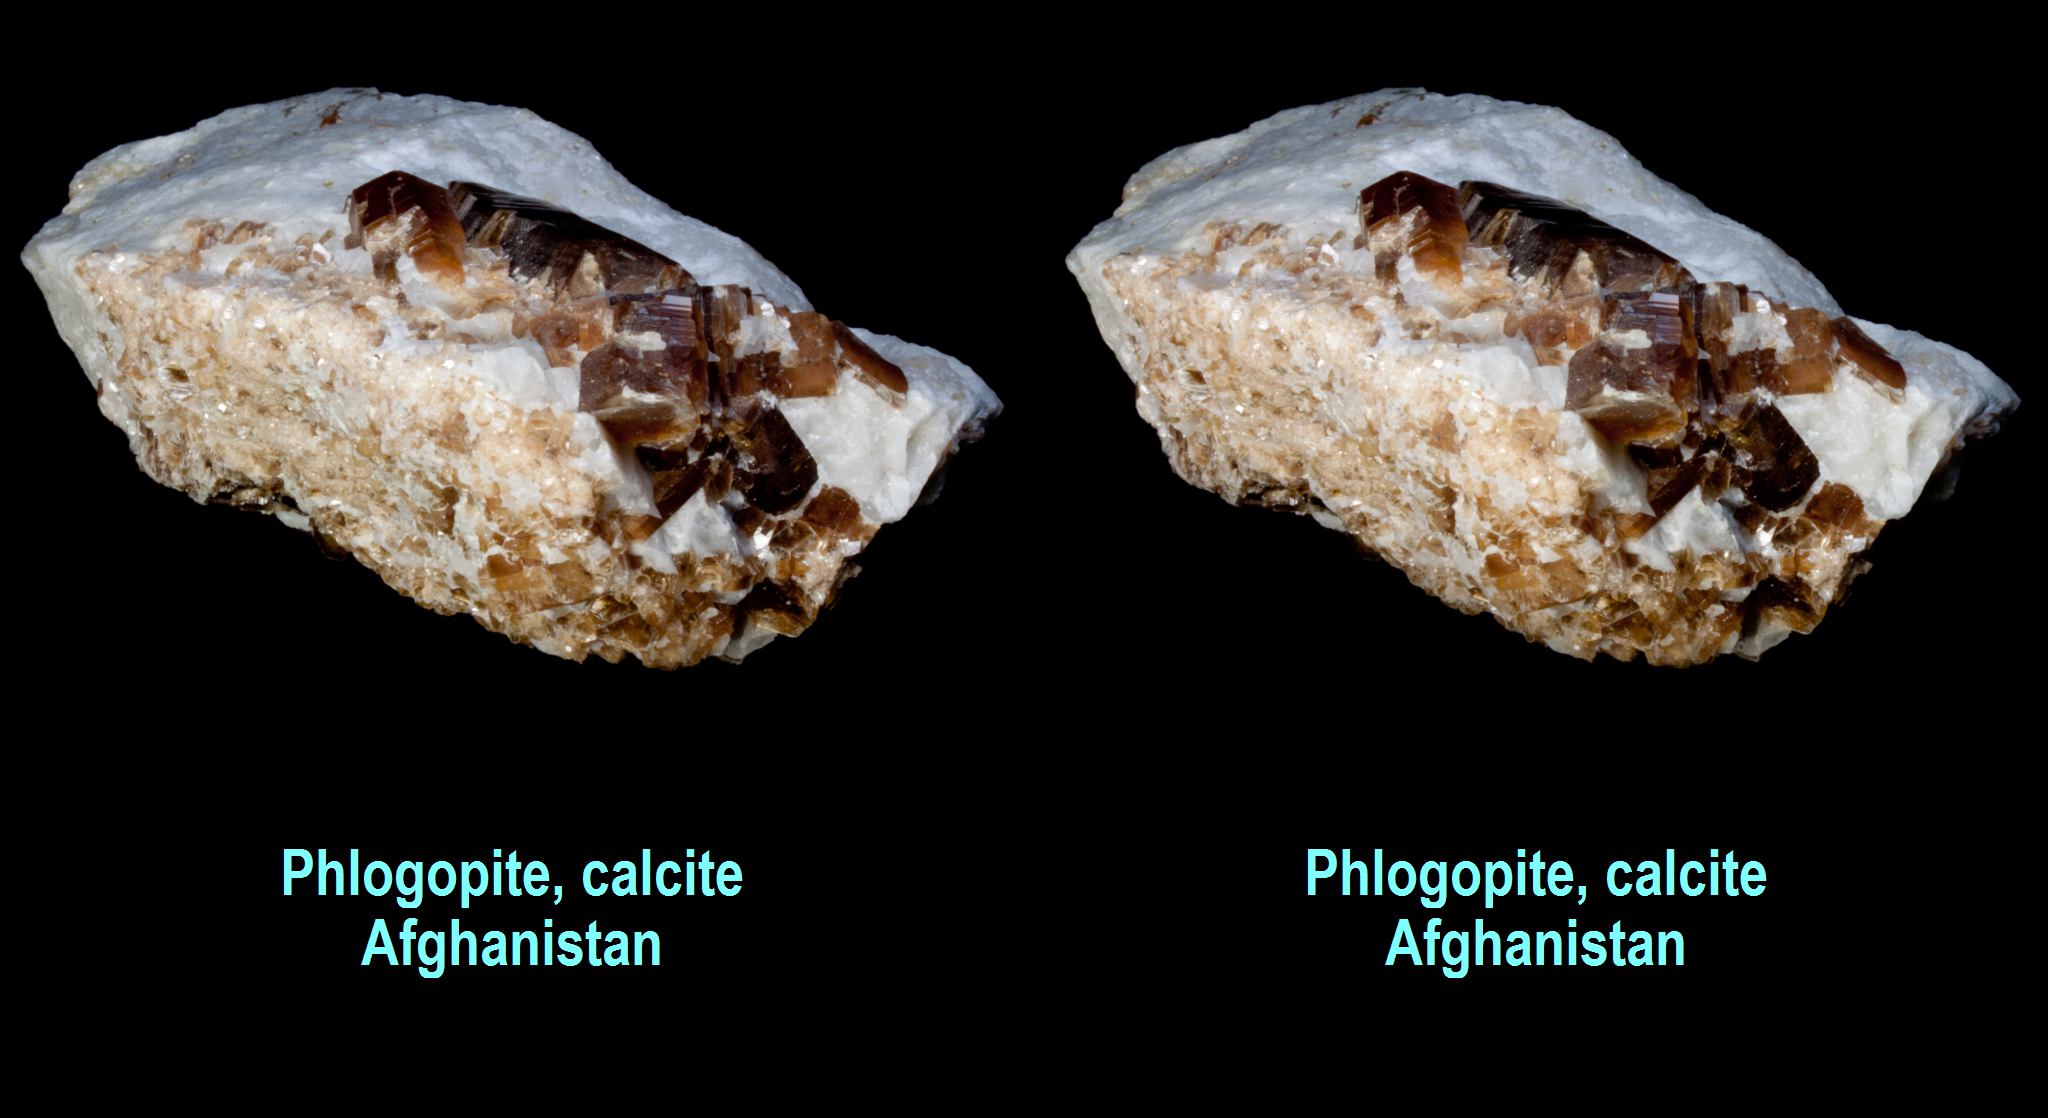 Phlogopite, calcite - Afghanistan